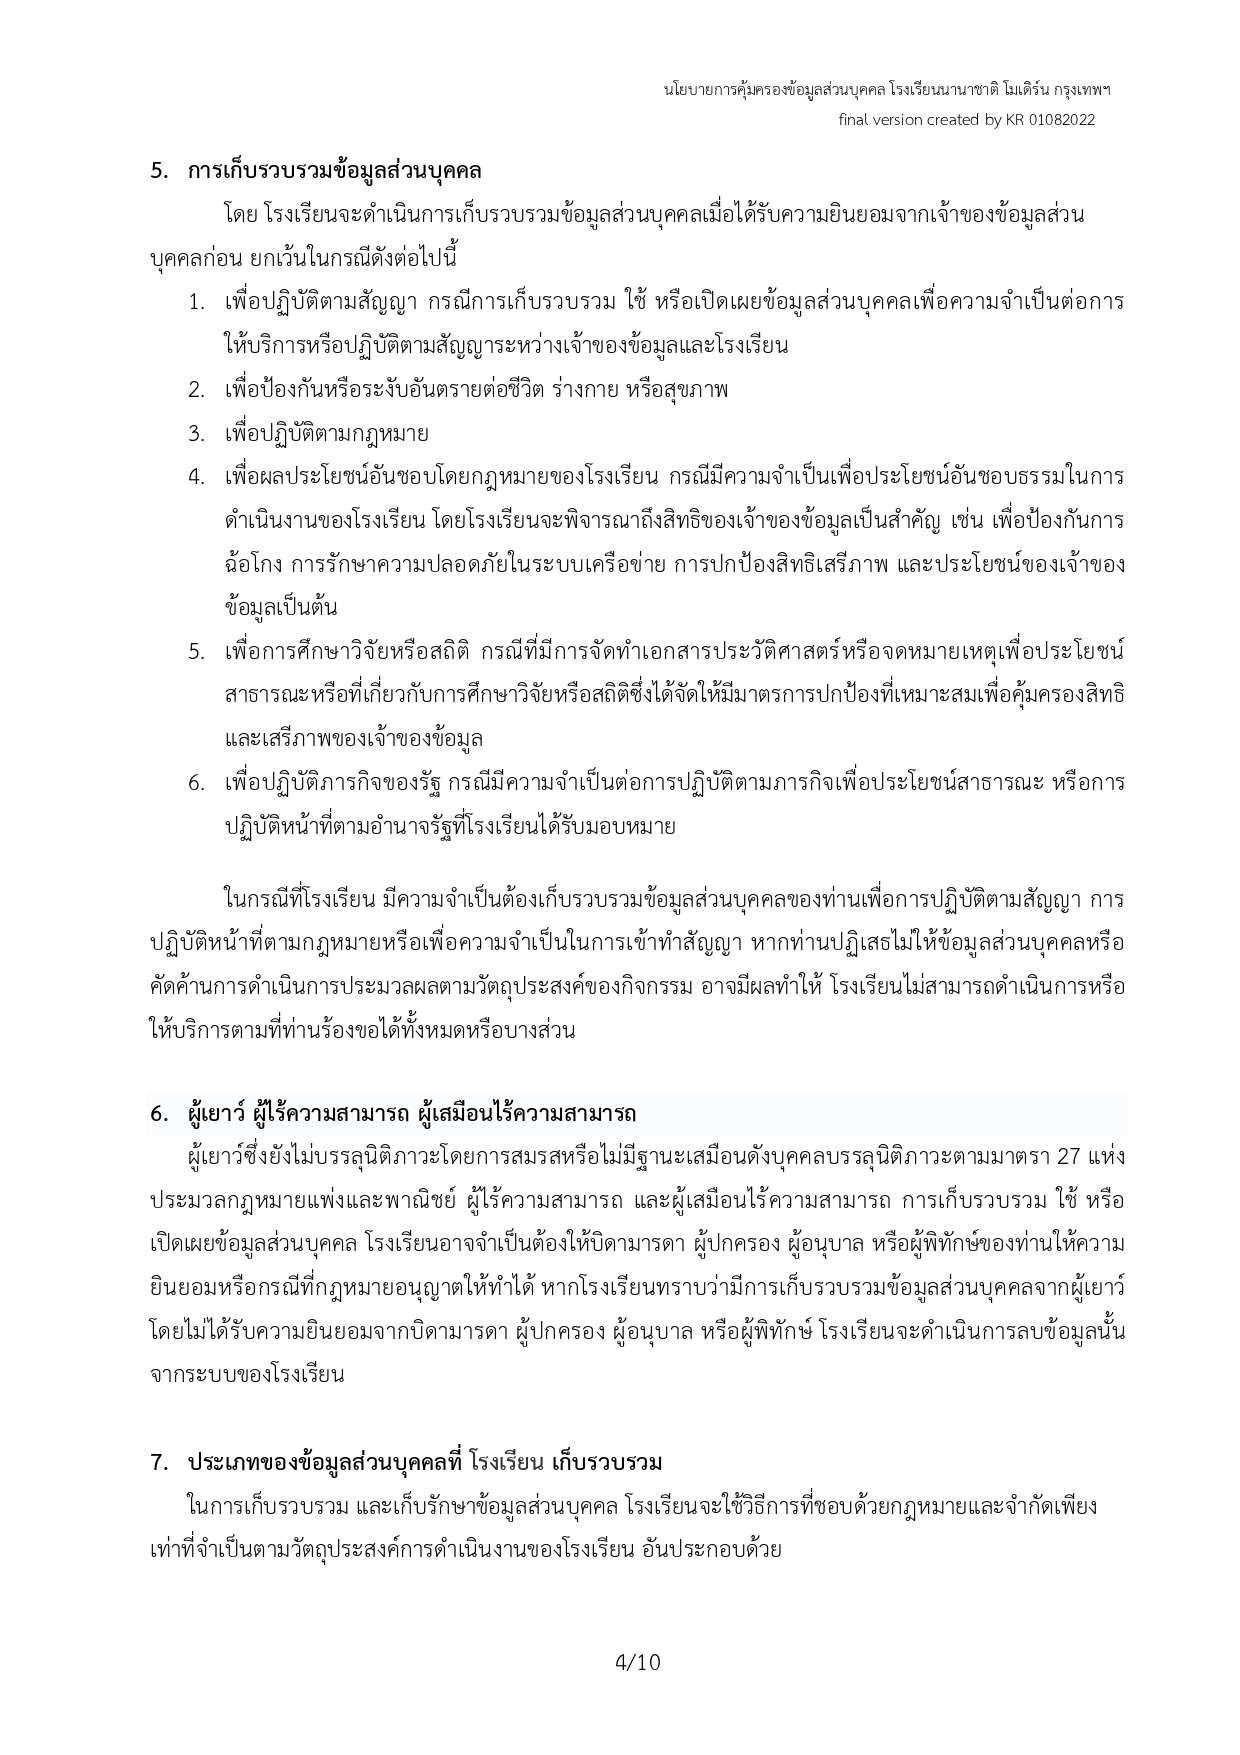 PDPA MISB ภาษาไทย final version 01012566 ไม่ลงชื่อ page 0004